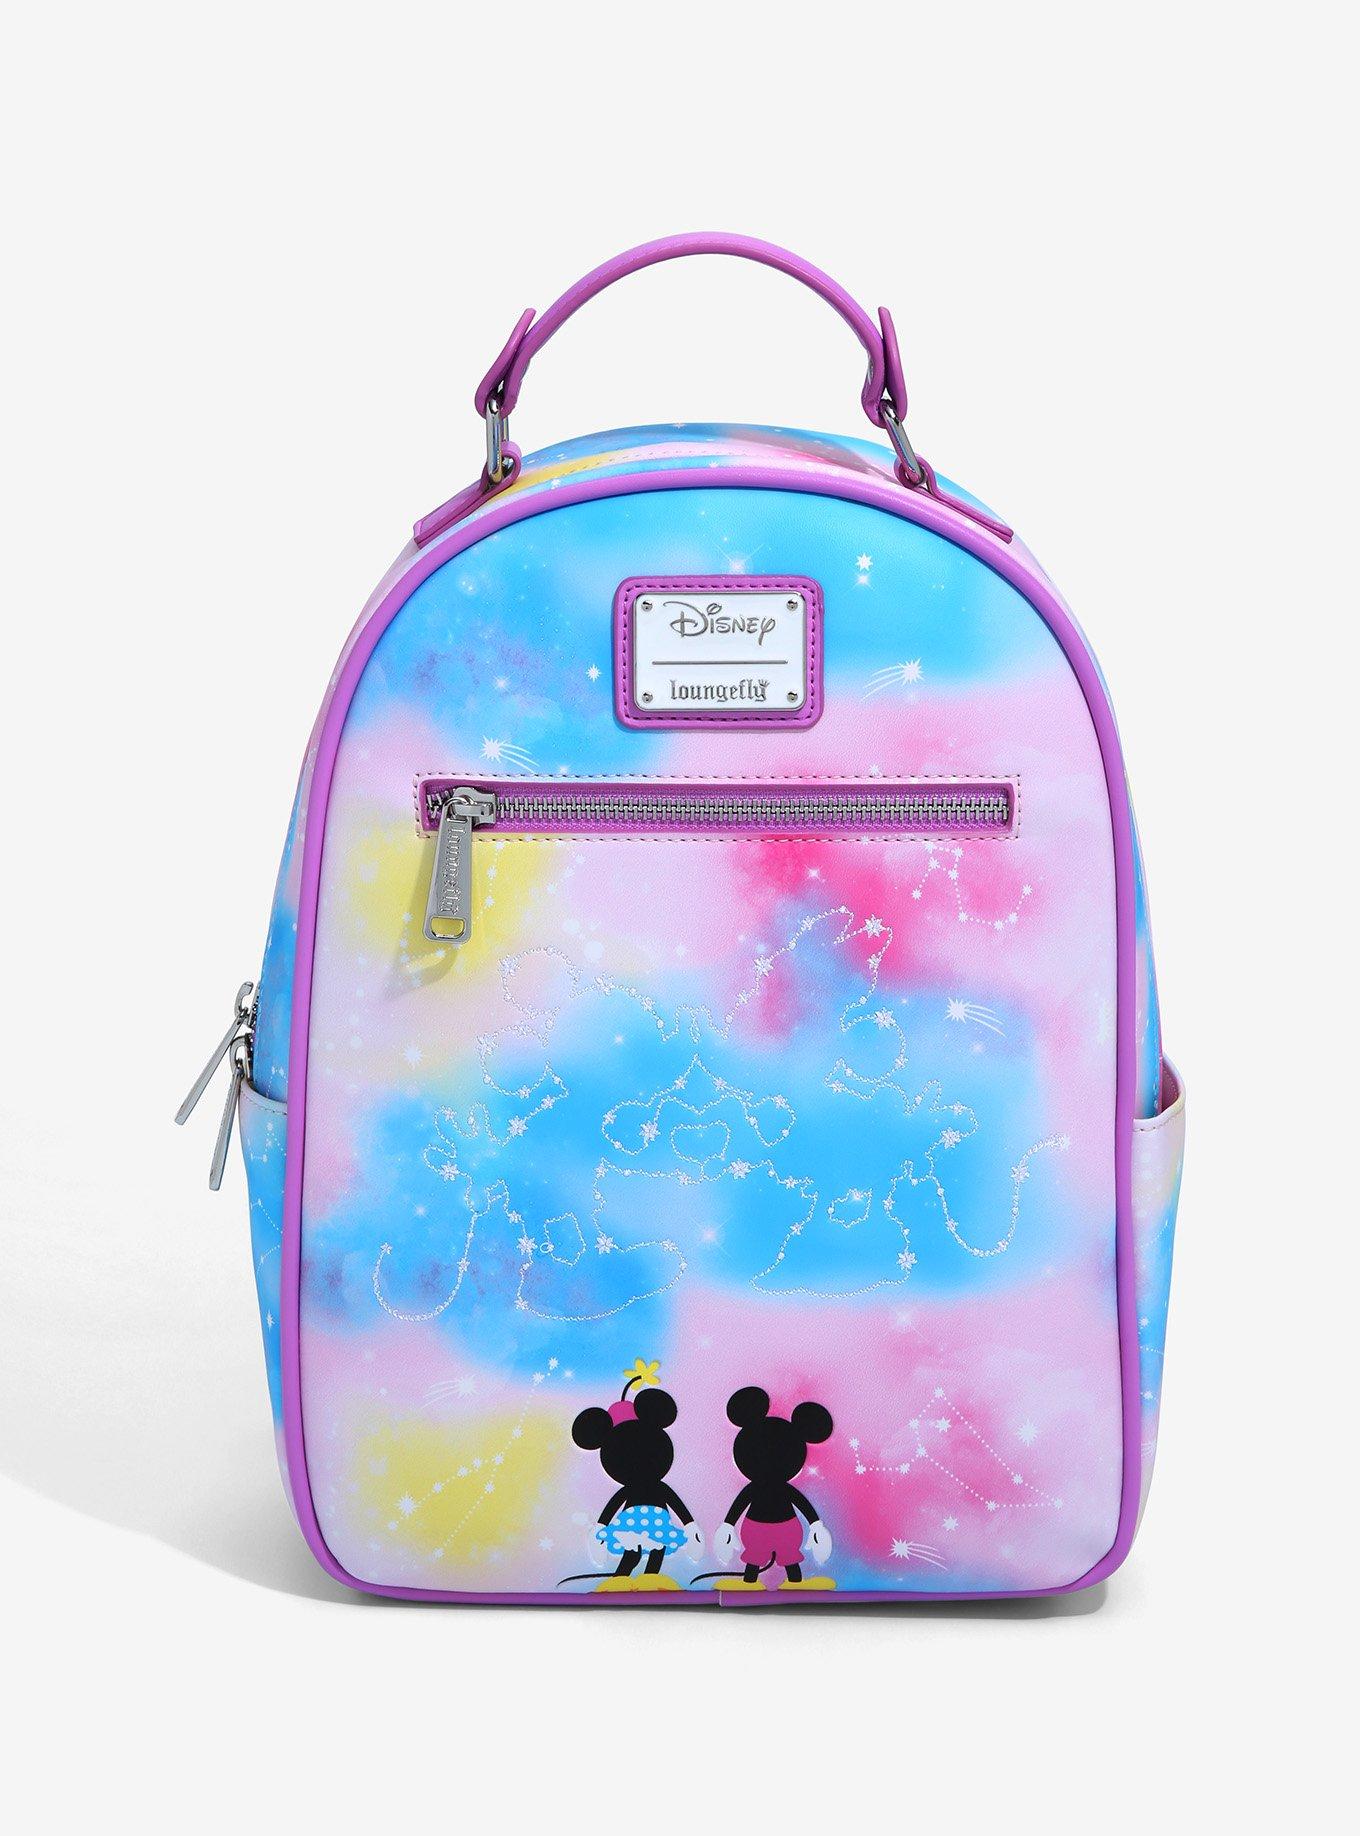 Loungefly Disney Days Mini Backpack Pink Castle Bag Aurora EUC